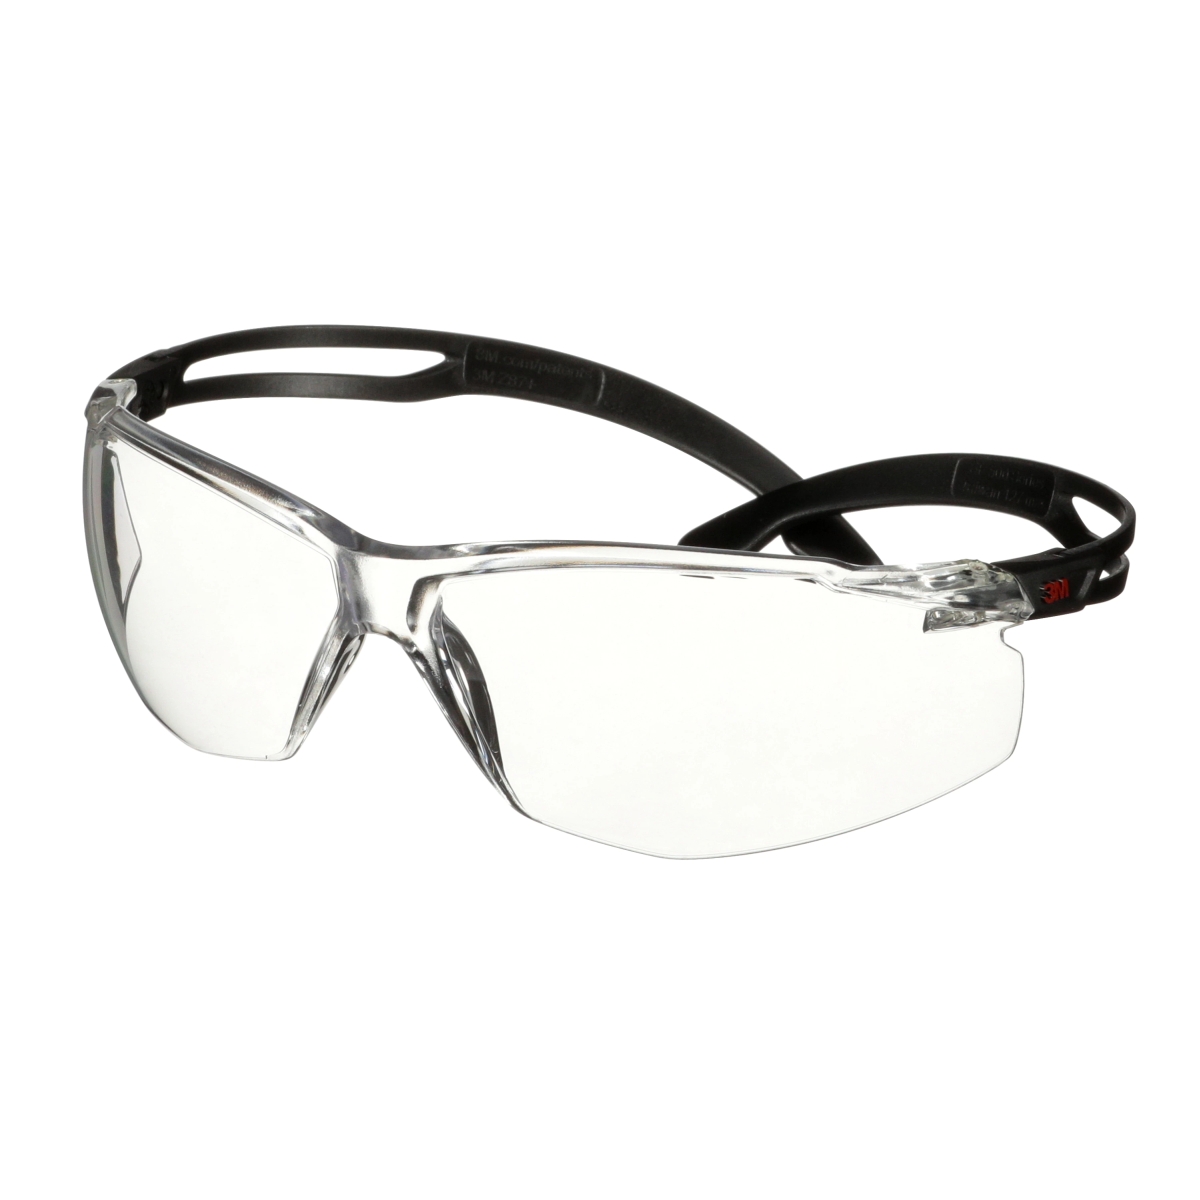 3M SecureFit 500 safety spectacles, black temples, anti-scratch/anti-fog coating, clear lens, SF501AF-BLK